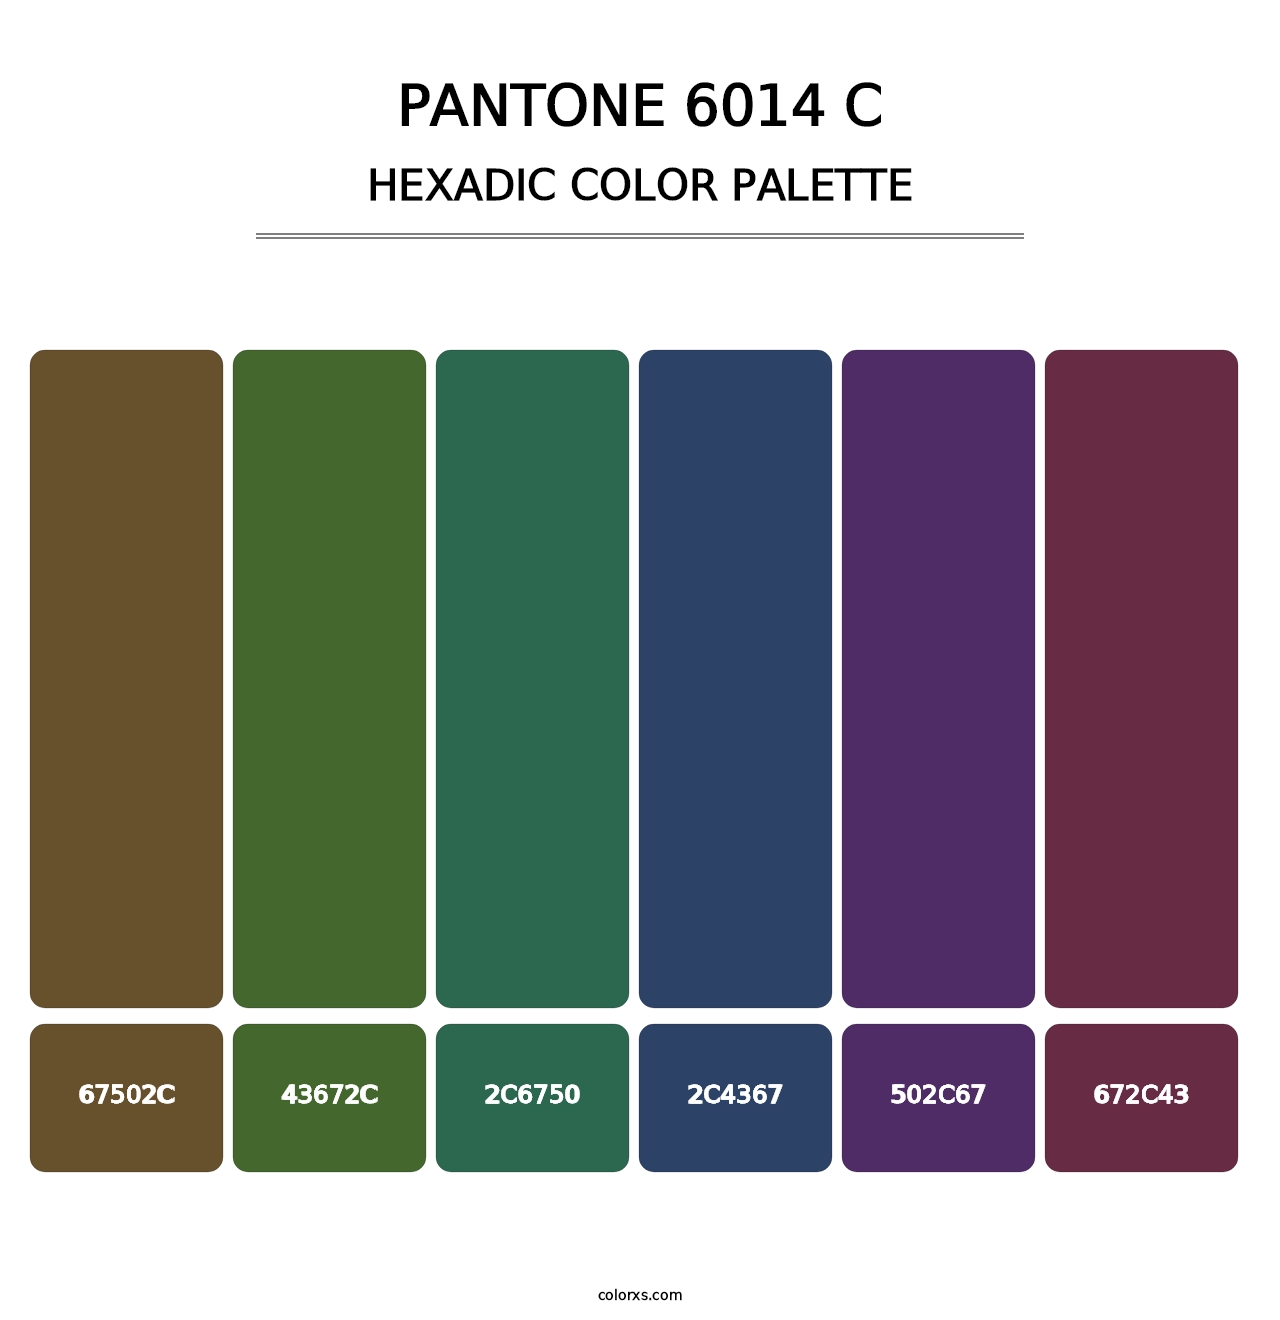 PANTONE 6014 C - Hexadic Color Palette